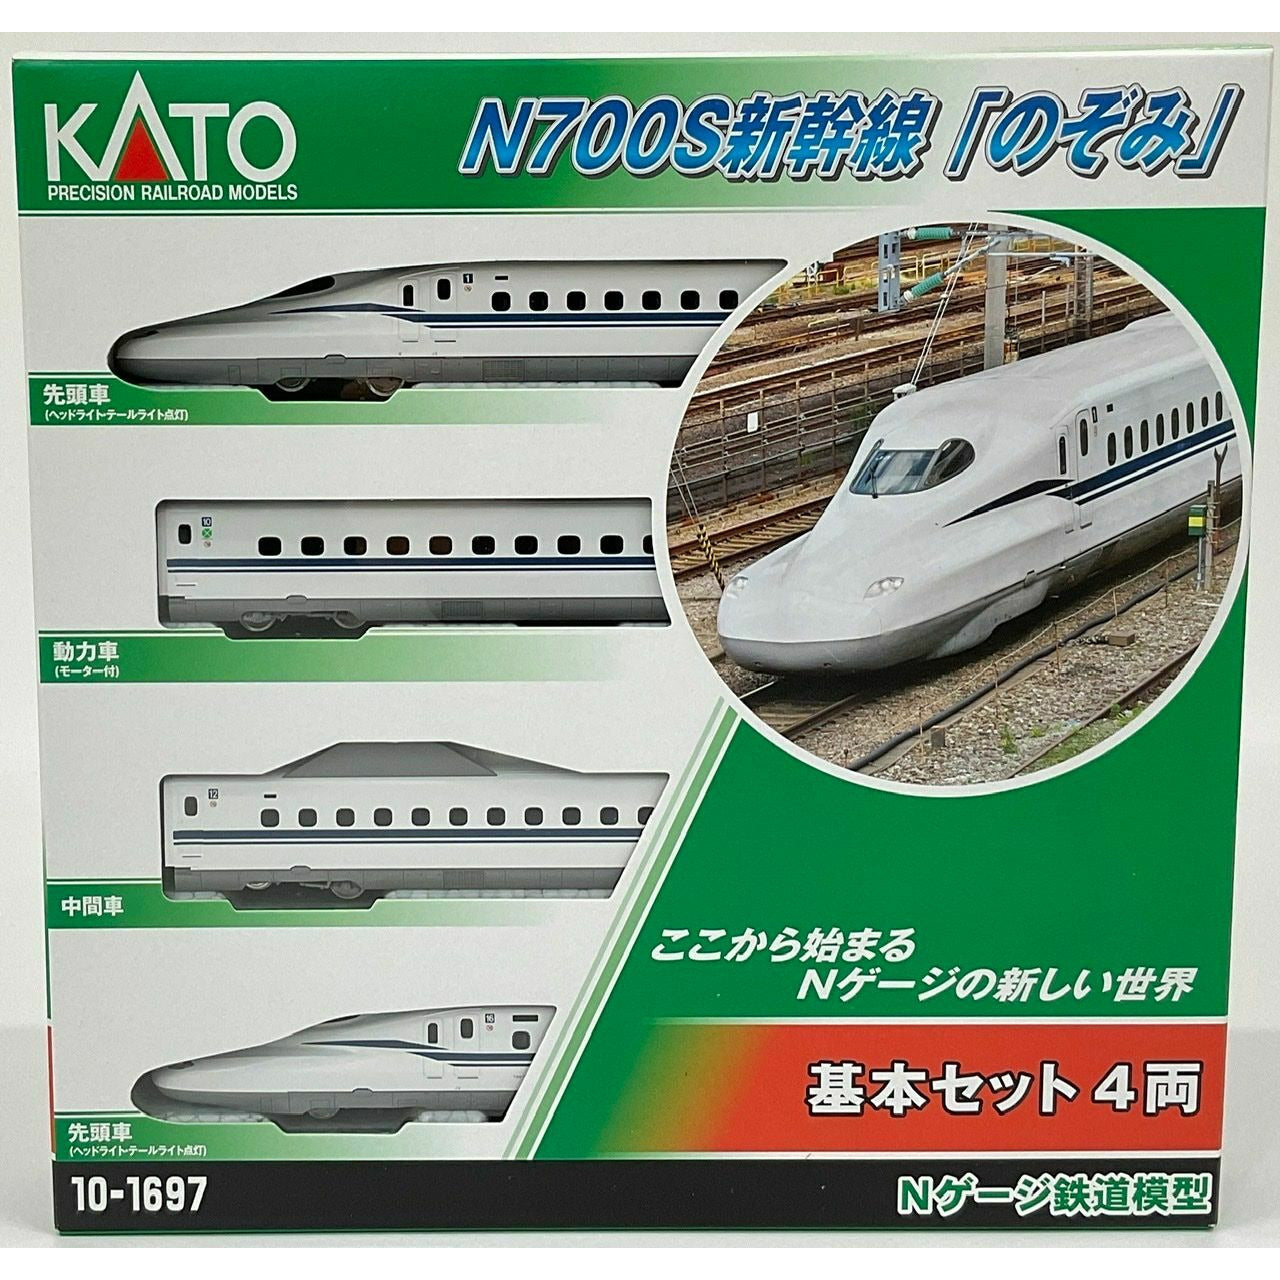 KATO Series N700S Shinkansen Nozomi basic set 4 cars